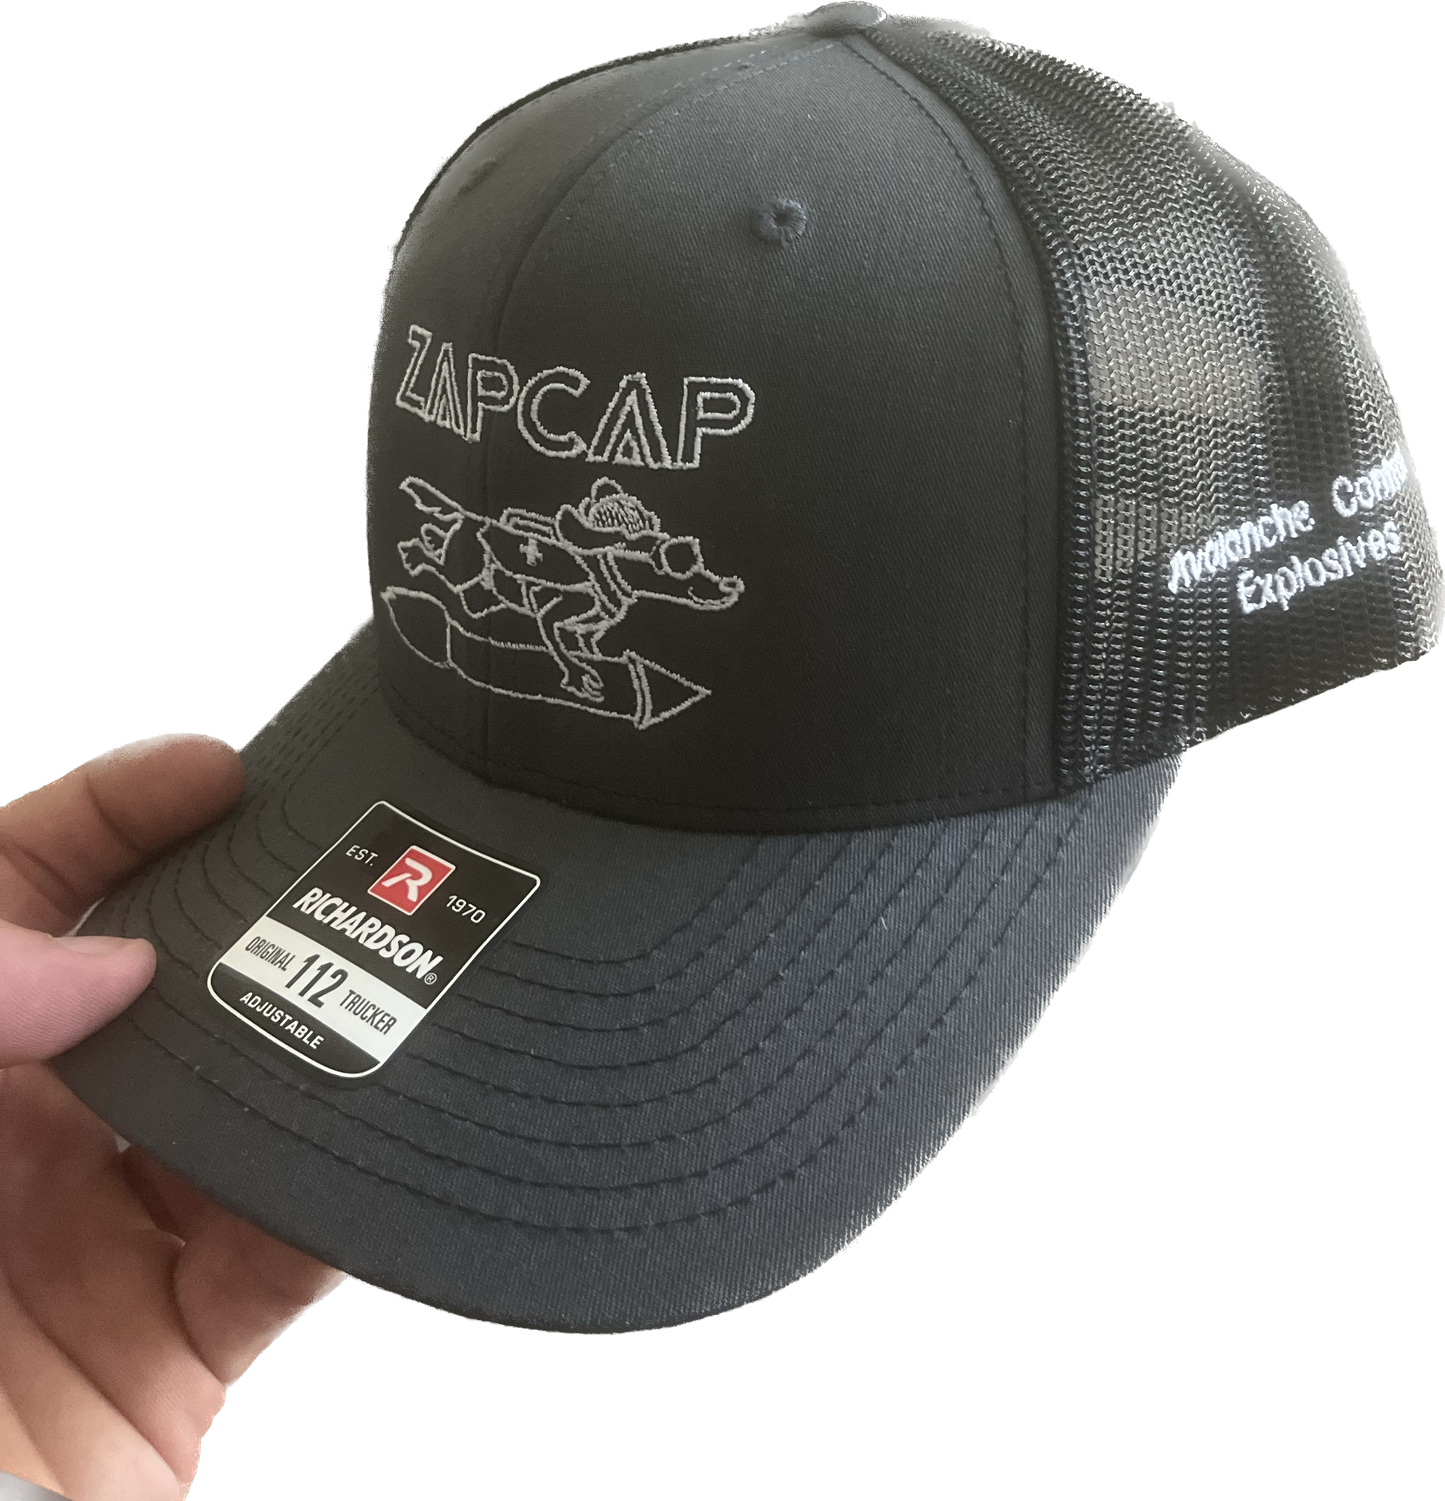 Zap Cap Trucker Hat - Avalanche Dog